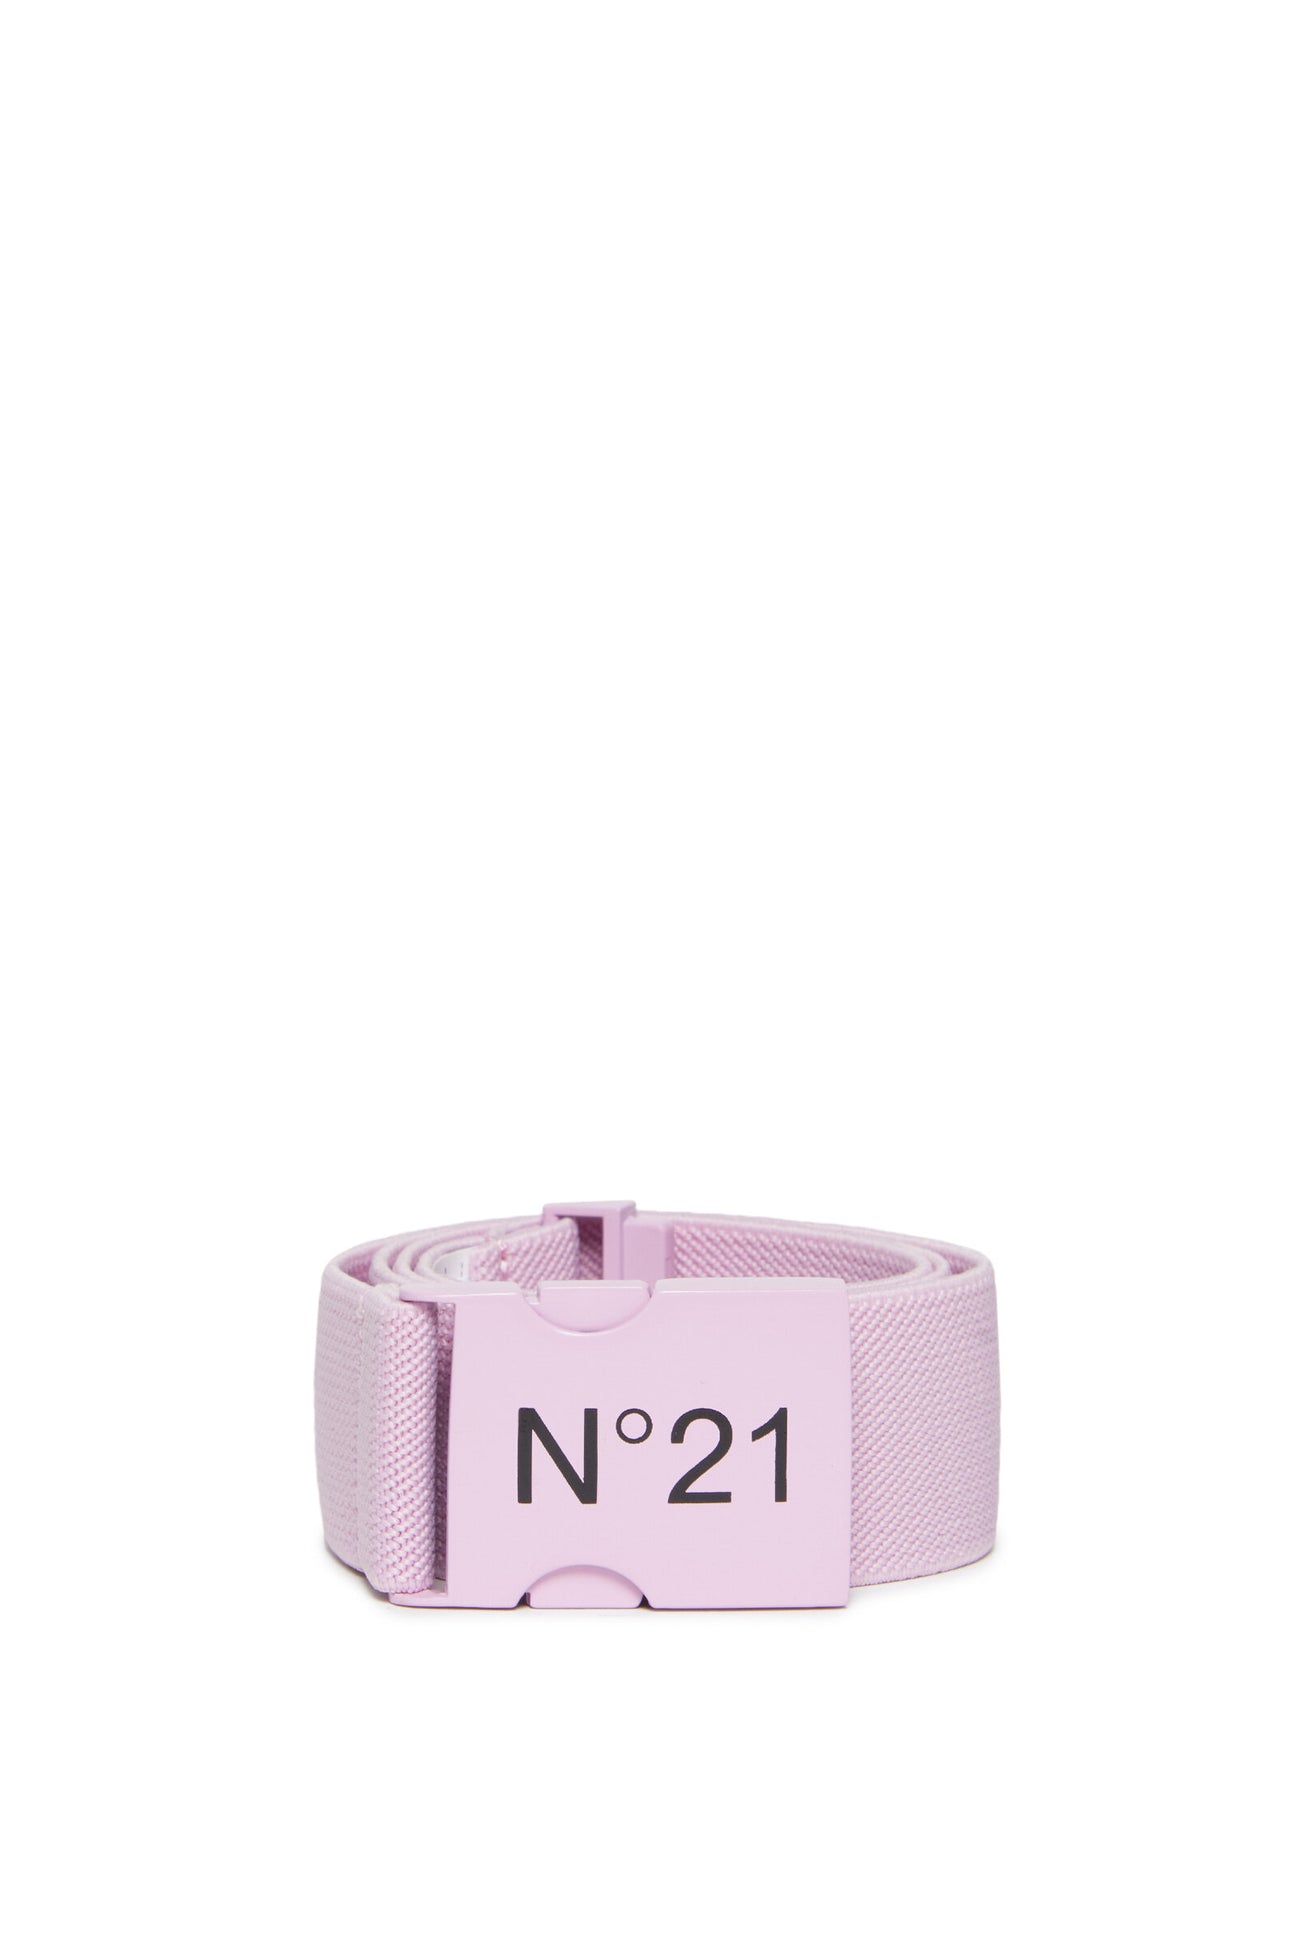 Pinkelastic belt with buckle with logo 